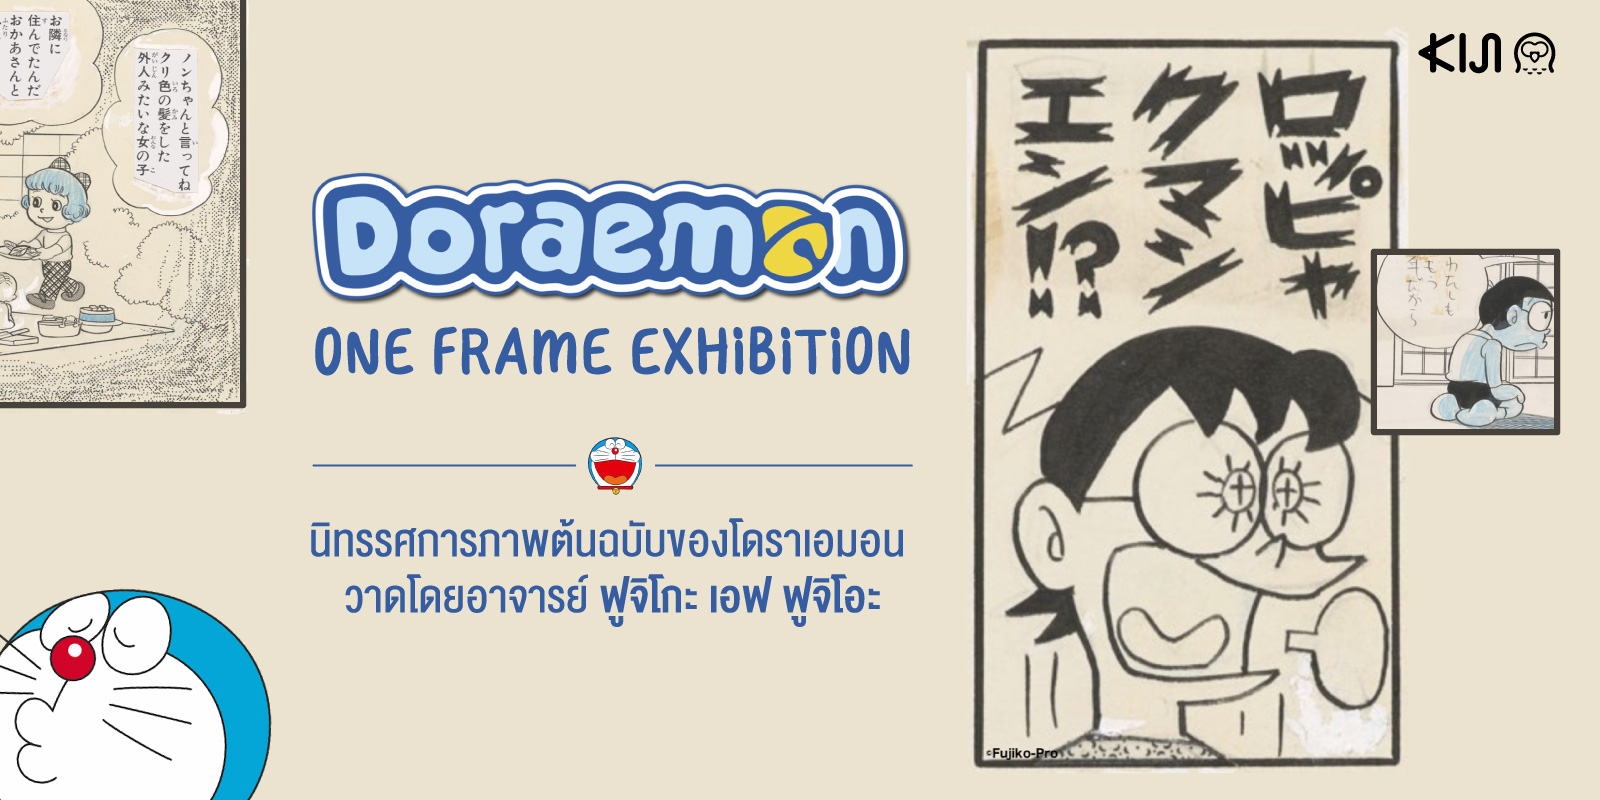 Doraemon One Frame Exhibition, Tokyo